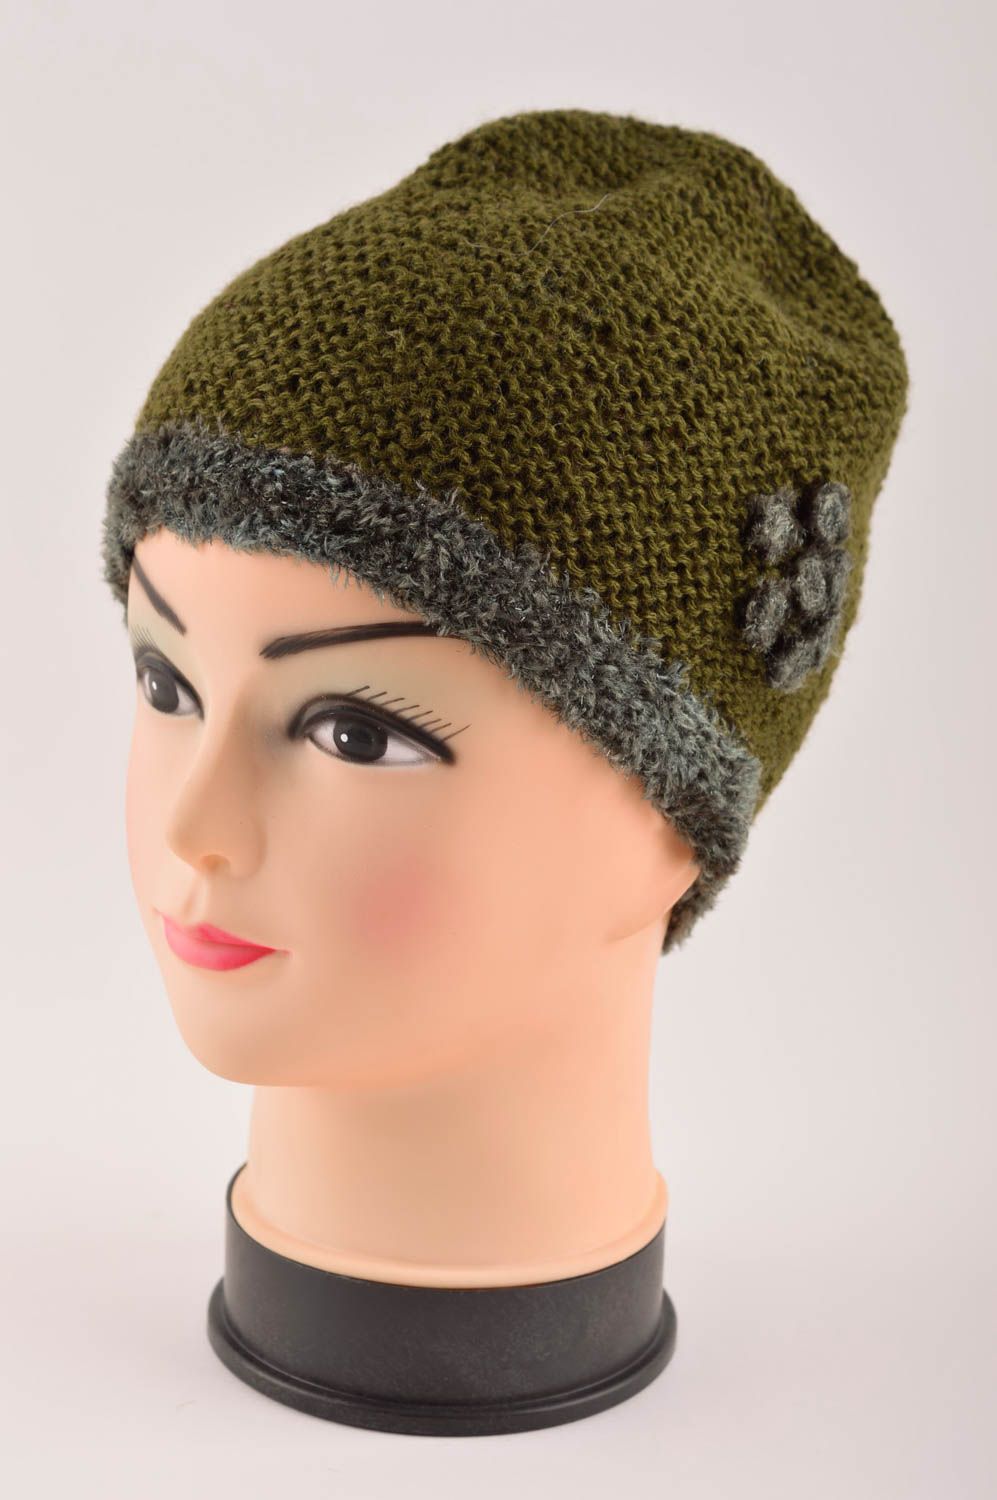 Handmade hat designer hat warm winter hat unusual hat for girl crocheted hat photo 2